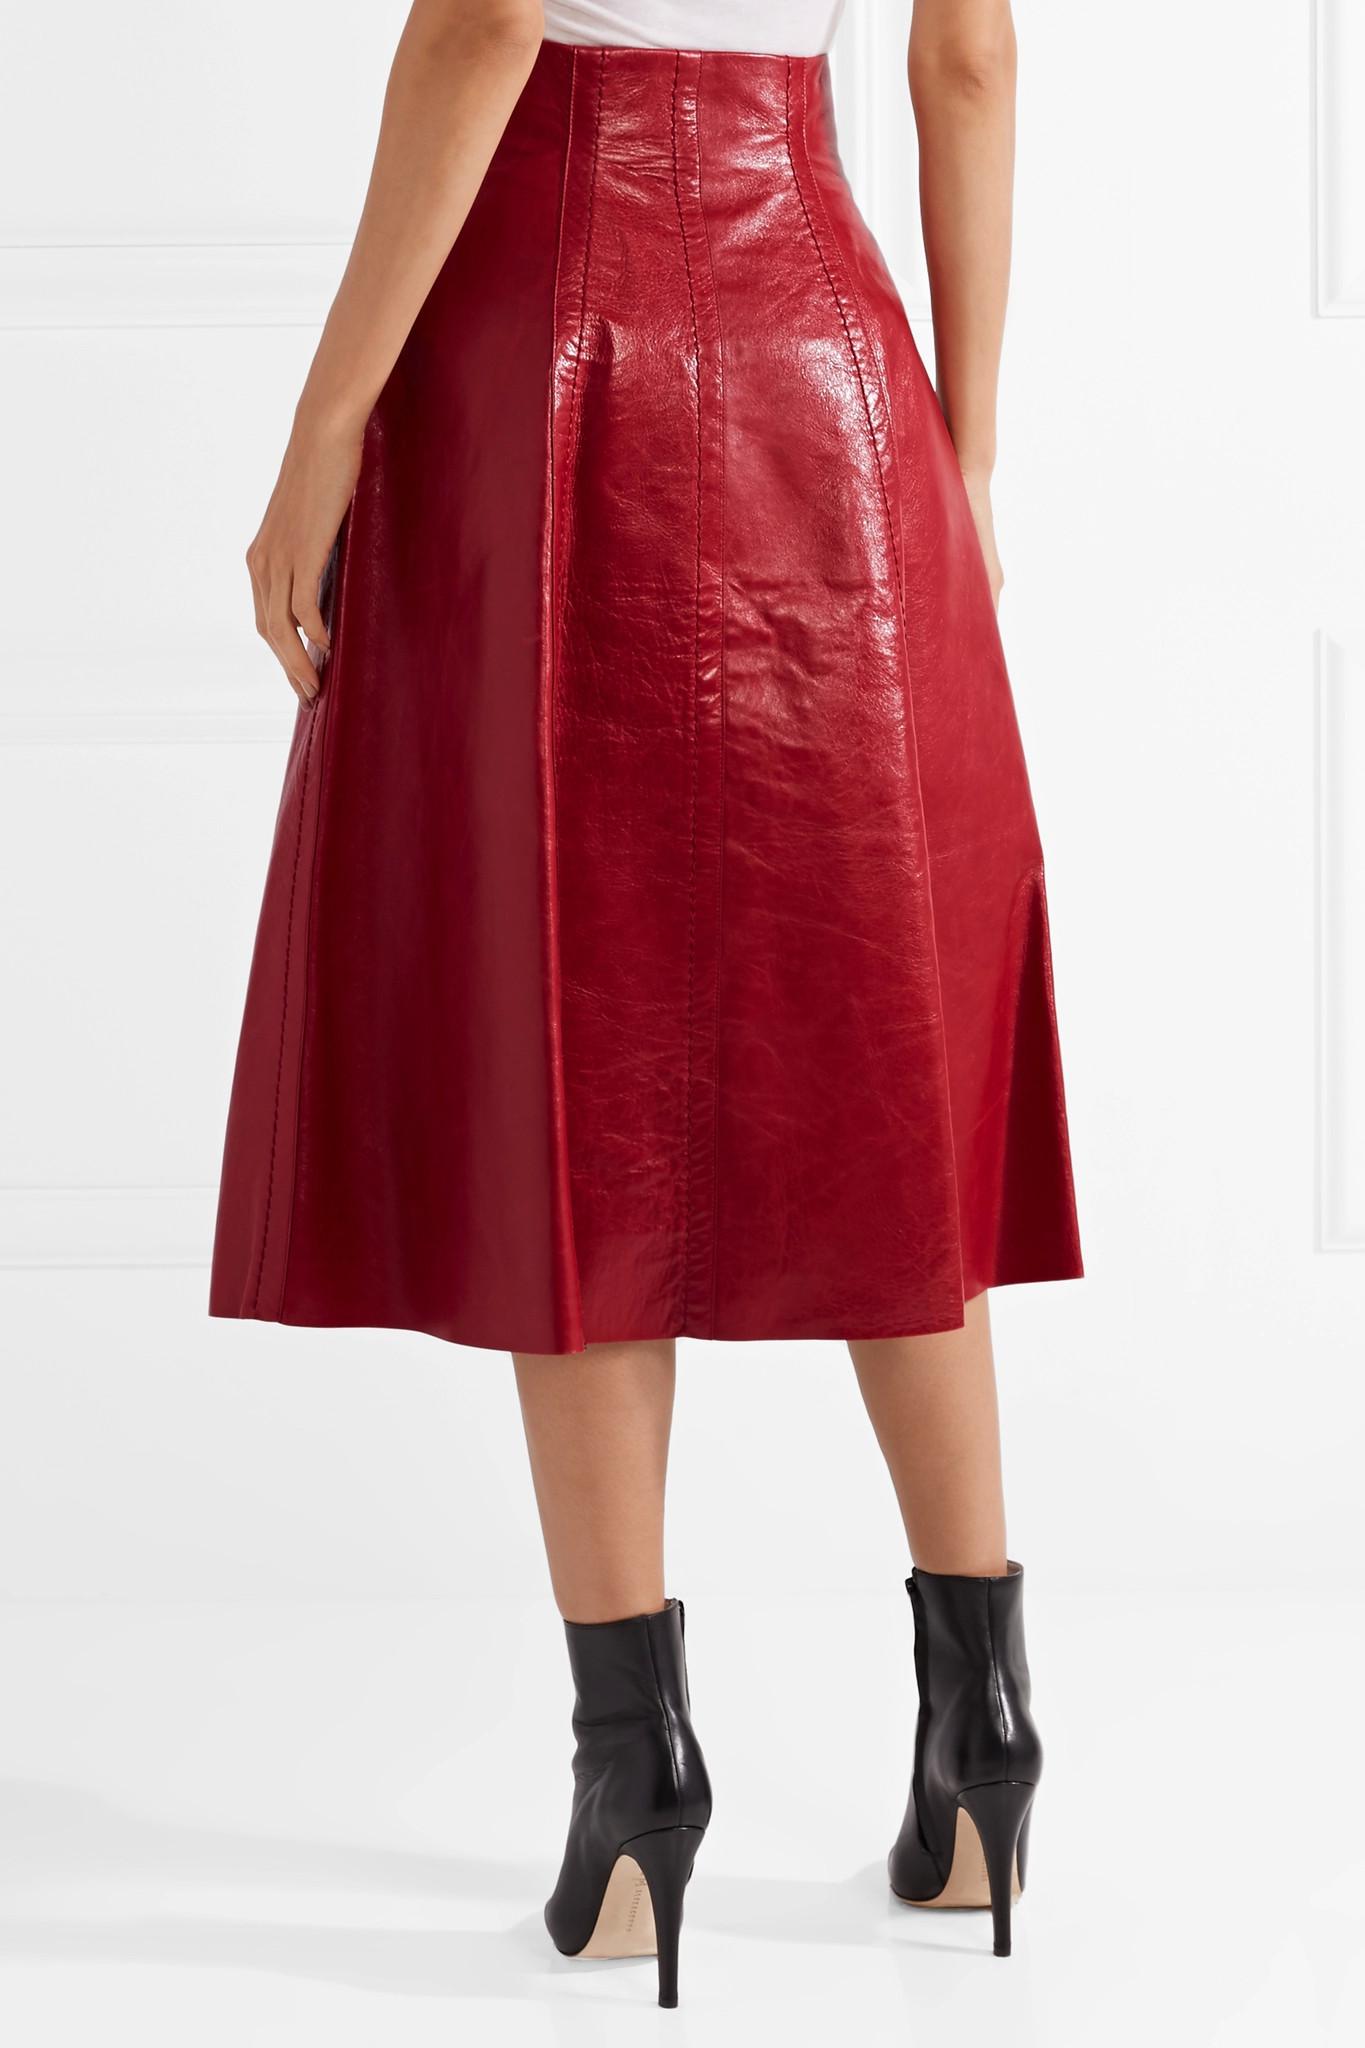 Fendi Leather Midi Skirt in Red - Lyst